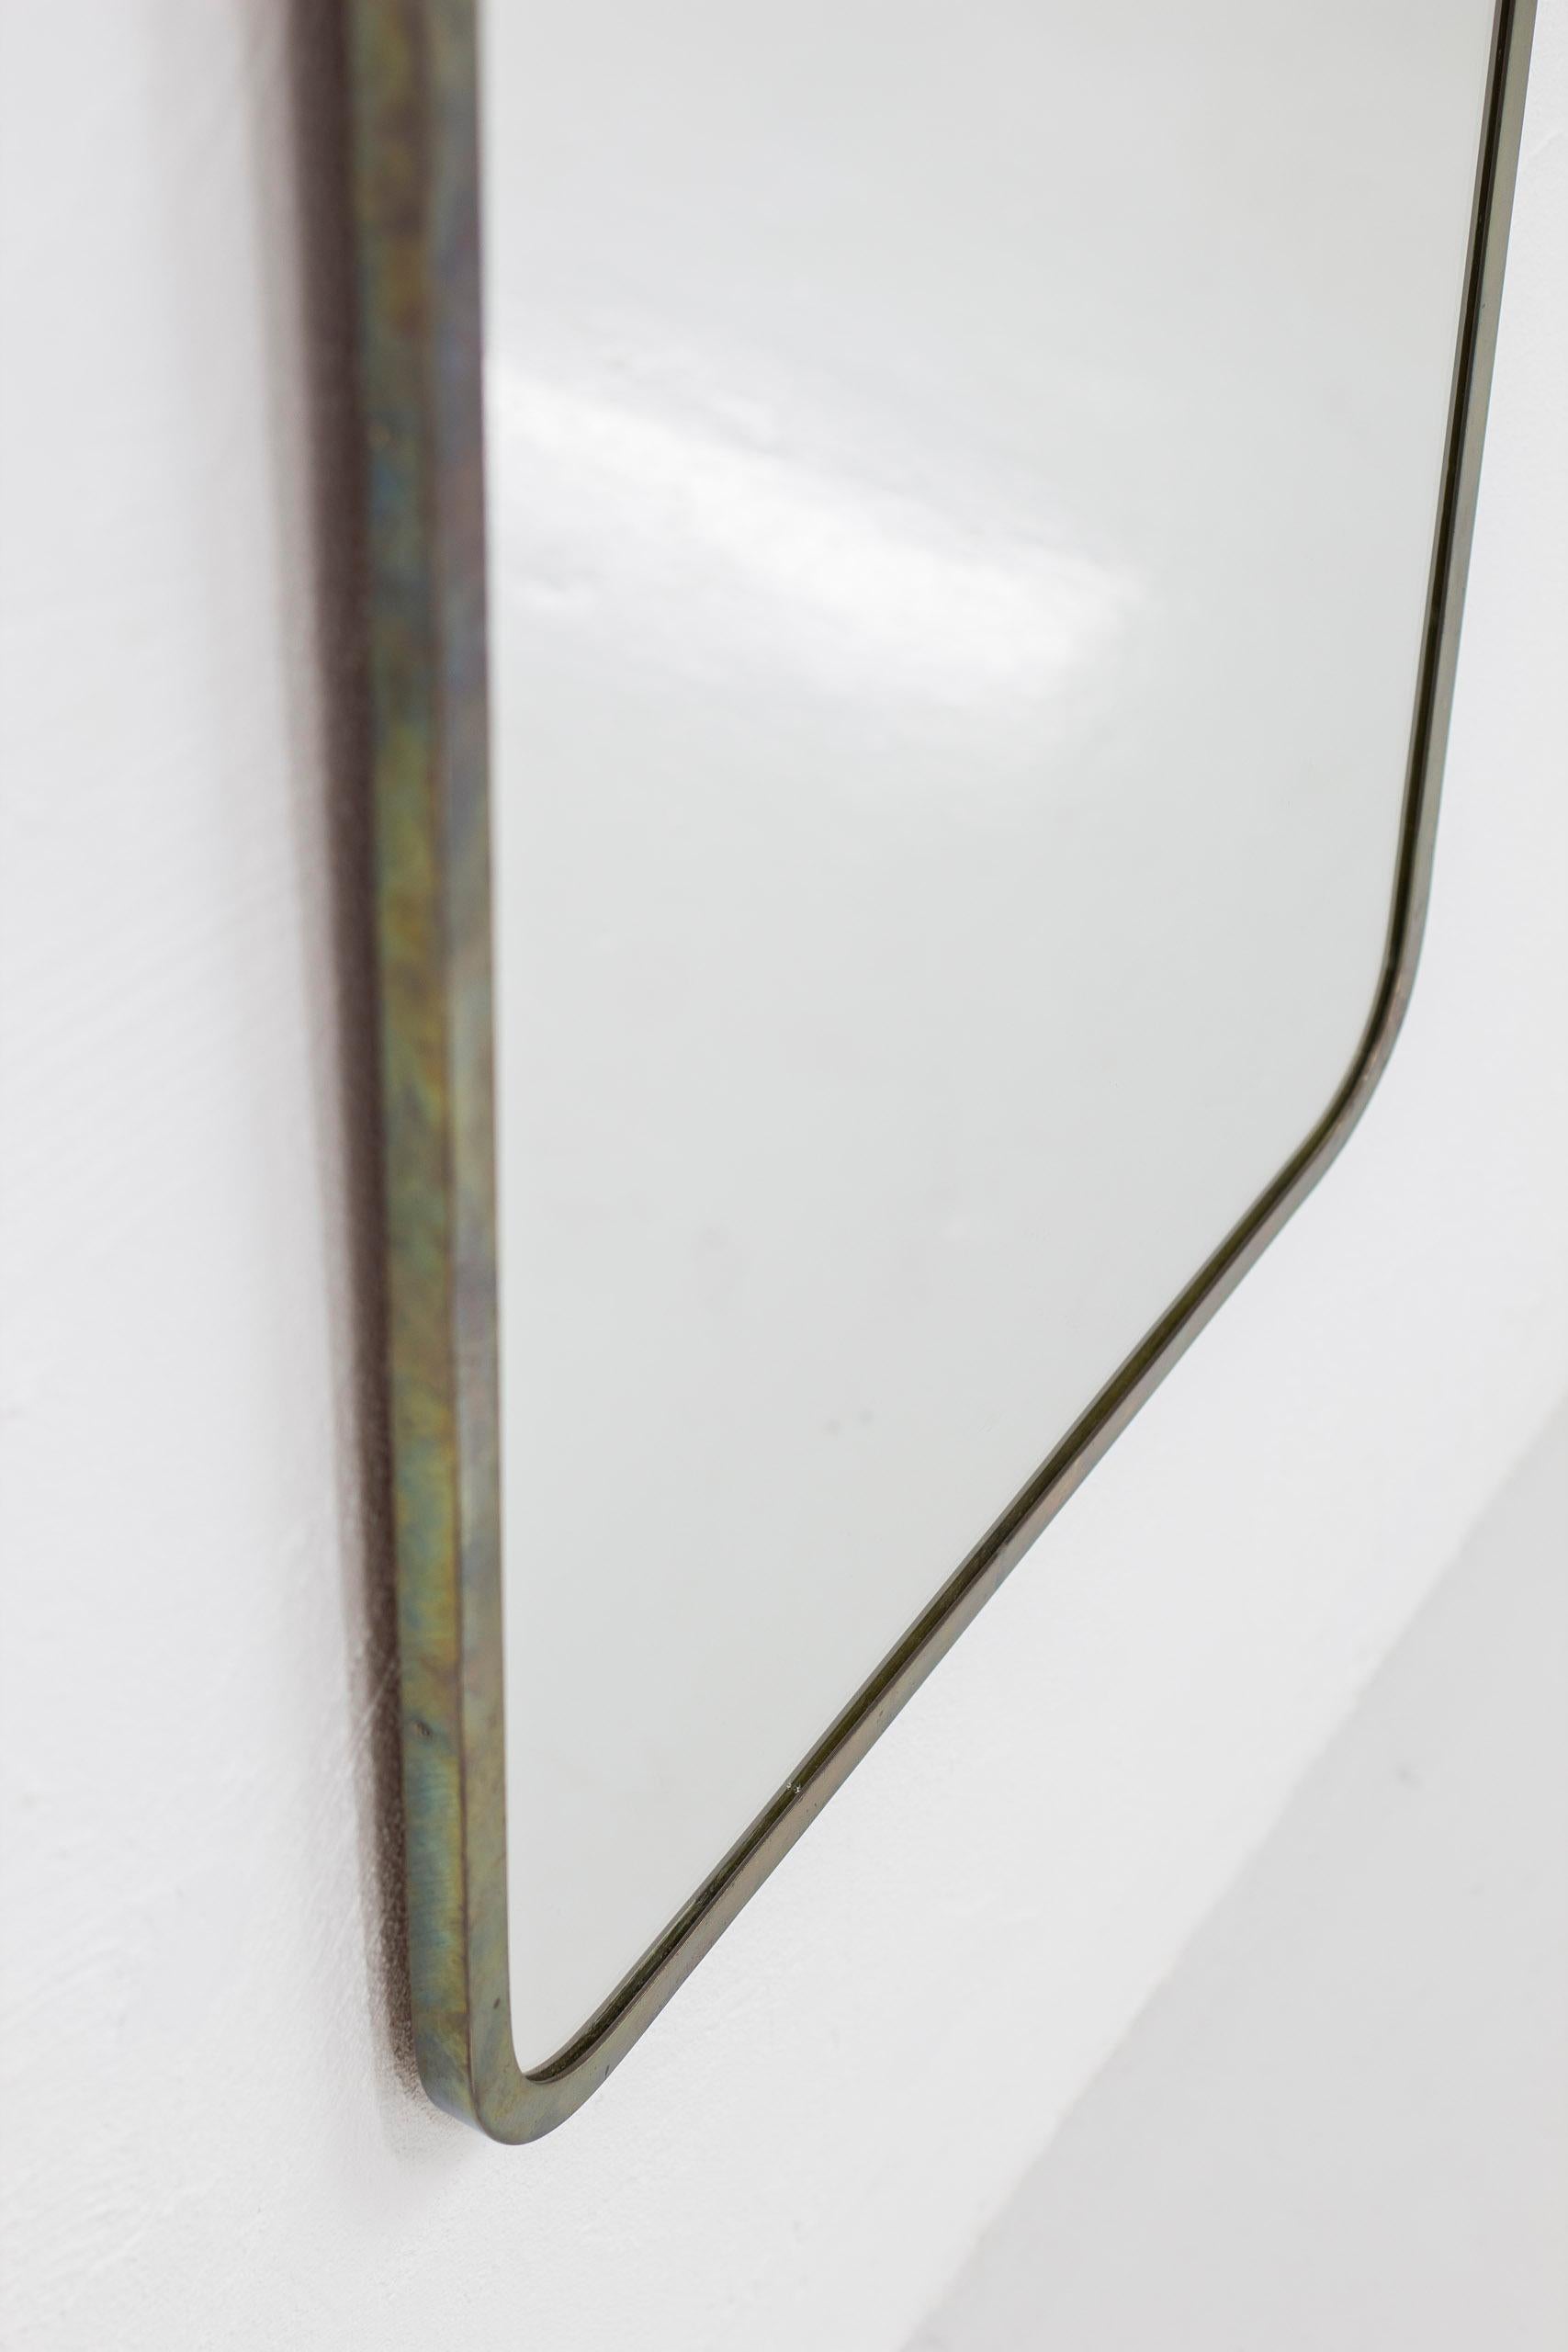 Swedish modern brass mirror, beautiful patina, by Nordiska Kompaniet, NK, 1930 For Sale 3